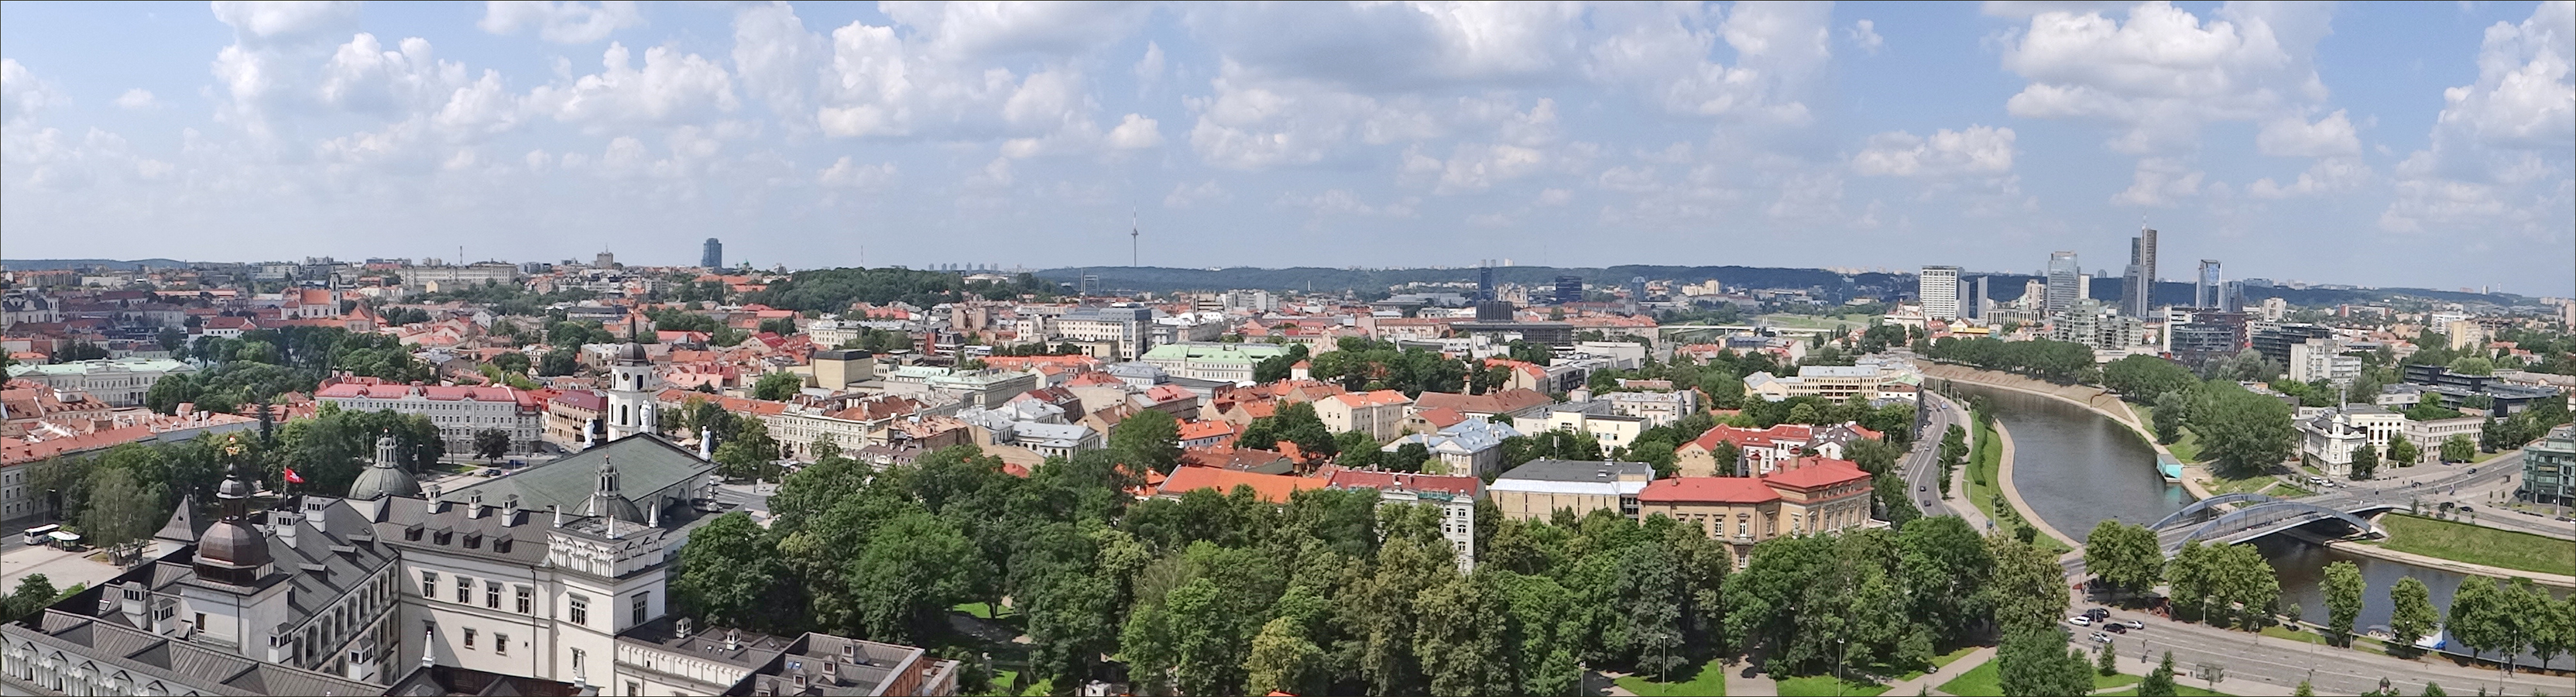 File:Panorama de Vilnius (Lituanie) (7669683144).jpg - Wikimedia Commons